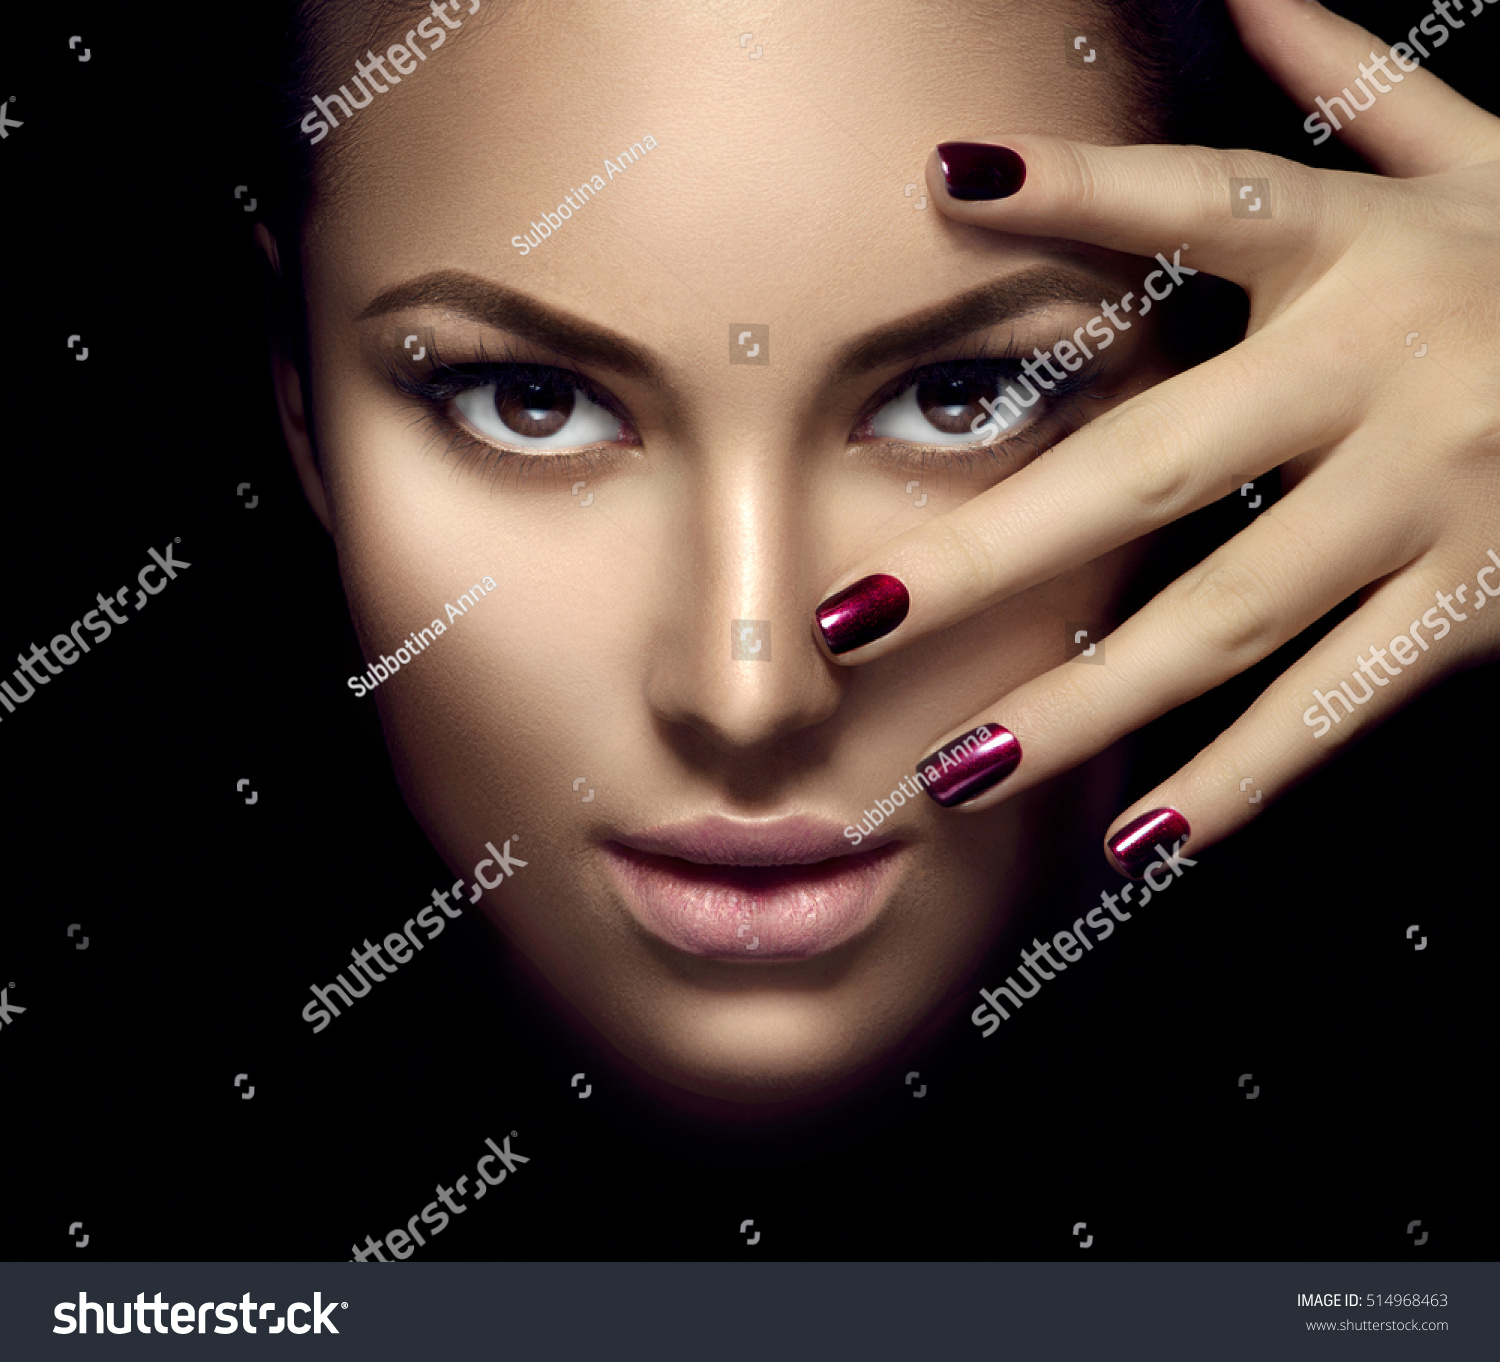 Portrait photo of woman's purple matte lipstick